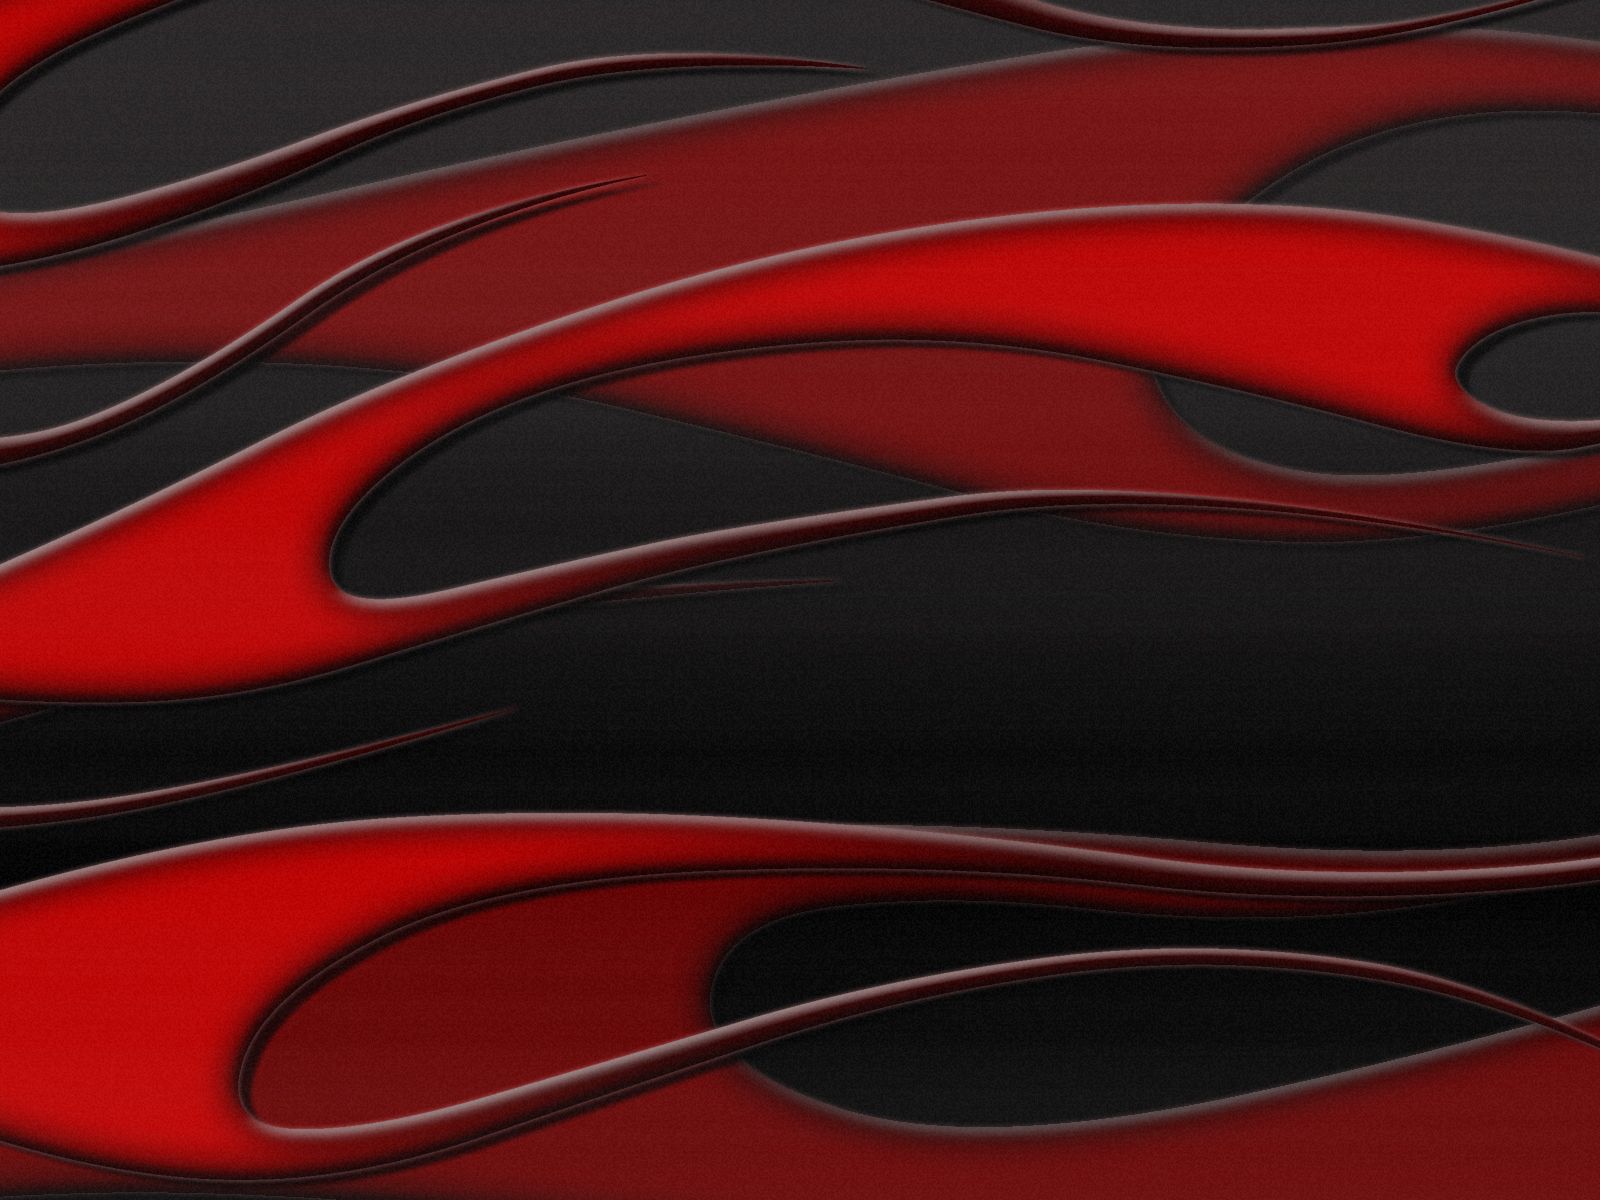 flames - red on black metallic by jbensch on DeviantArt